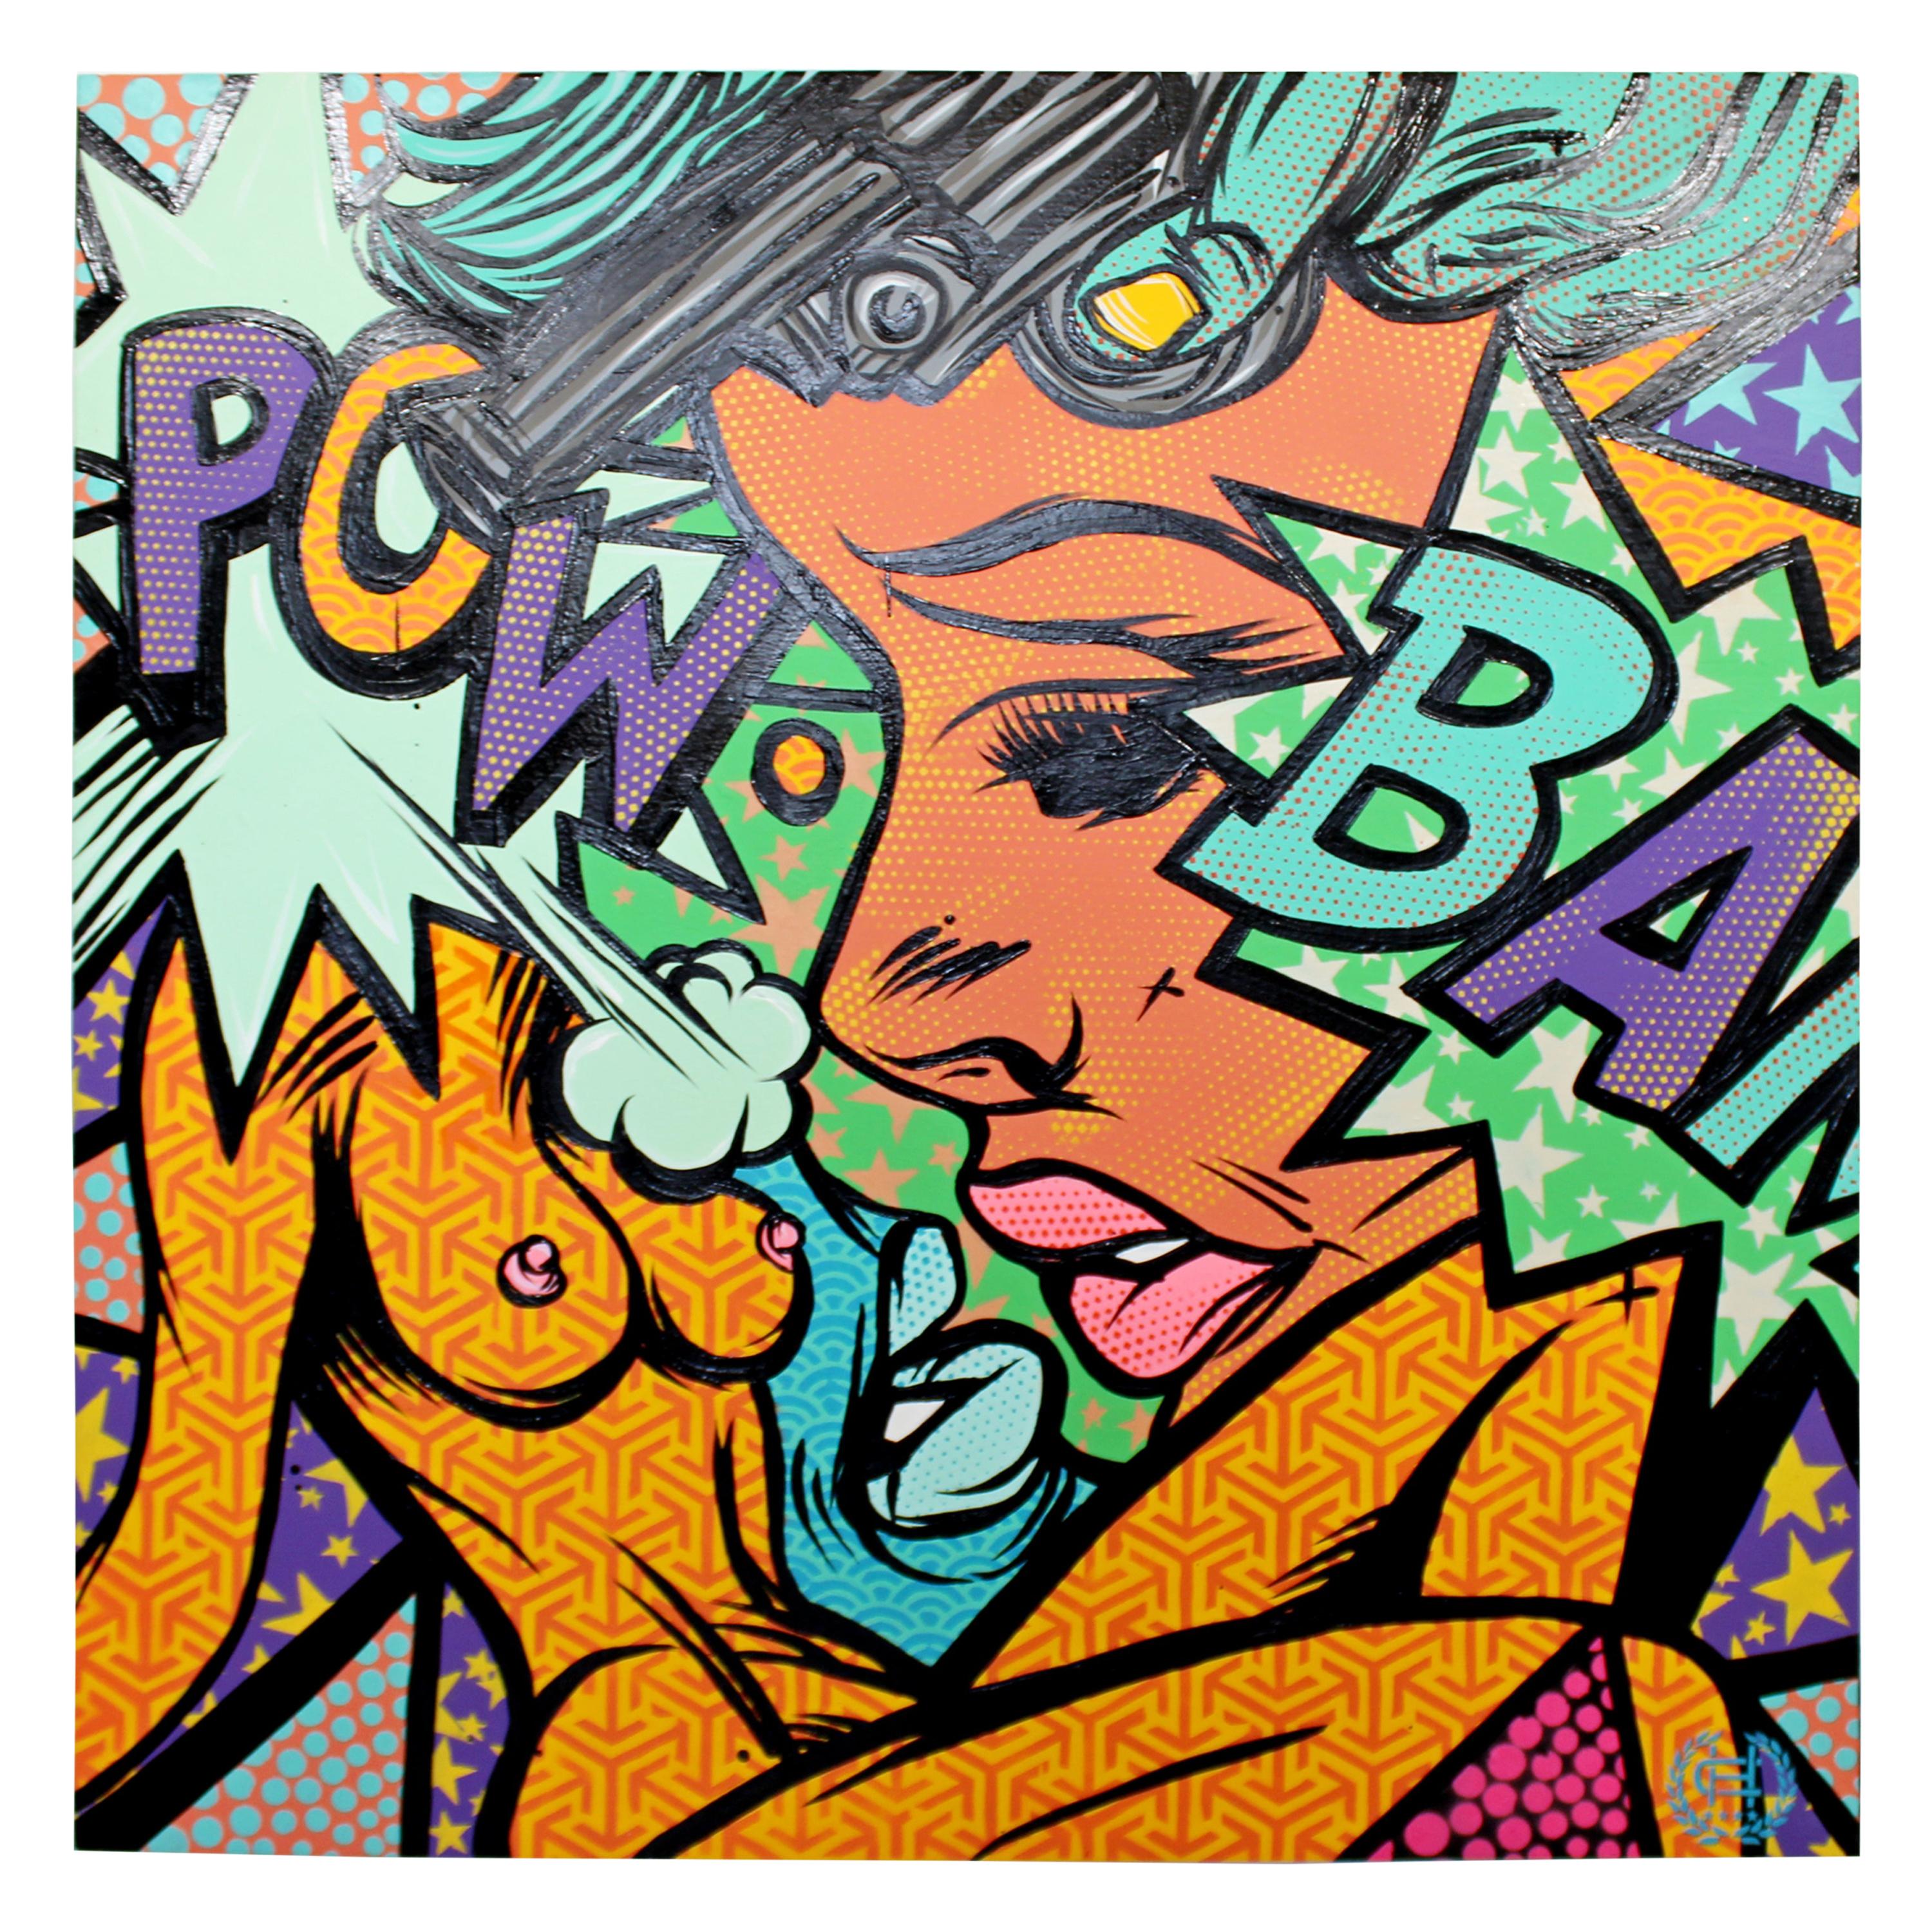 Contemporary Modernist Pop Graphic Art Signed Chris Hobe Artrevolt, Dated 2015